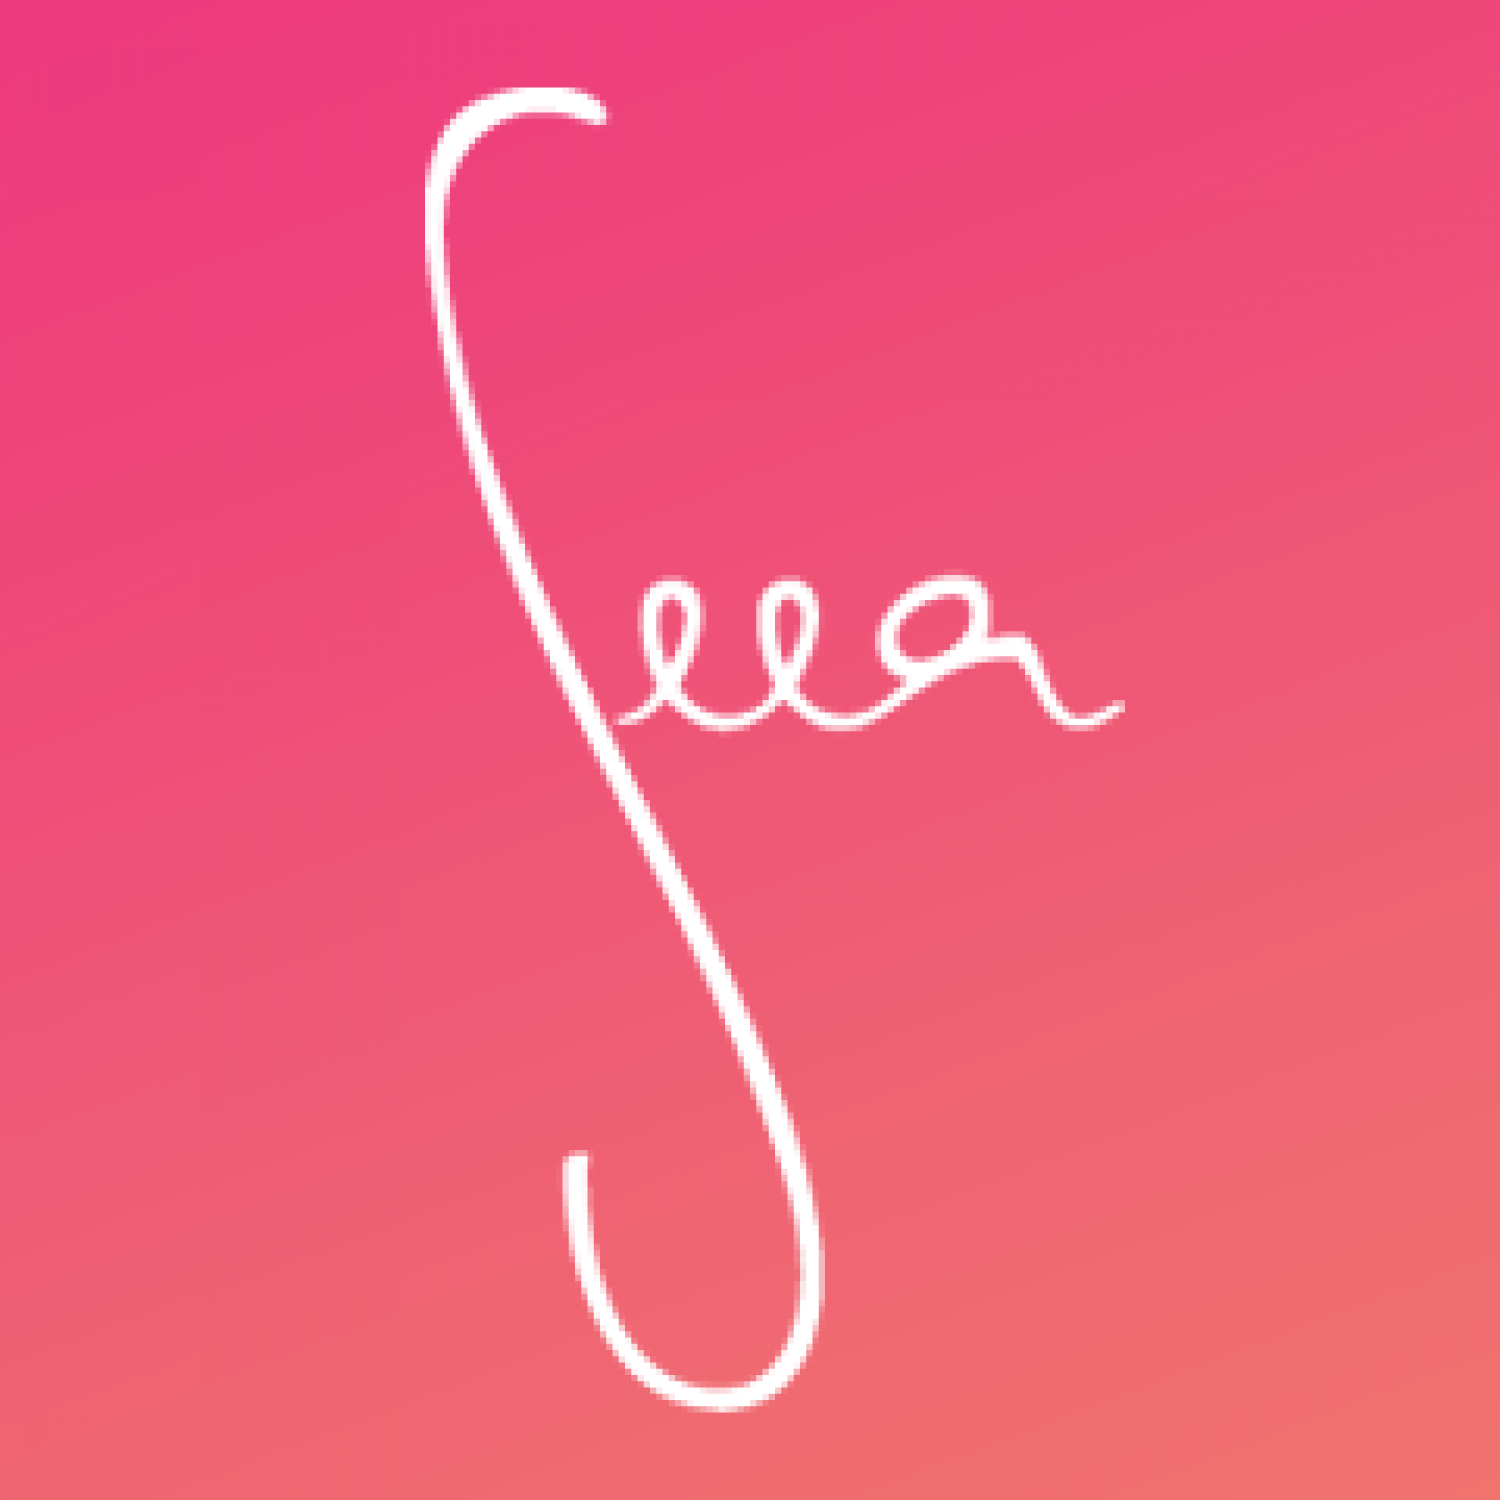 About "Seea" 1